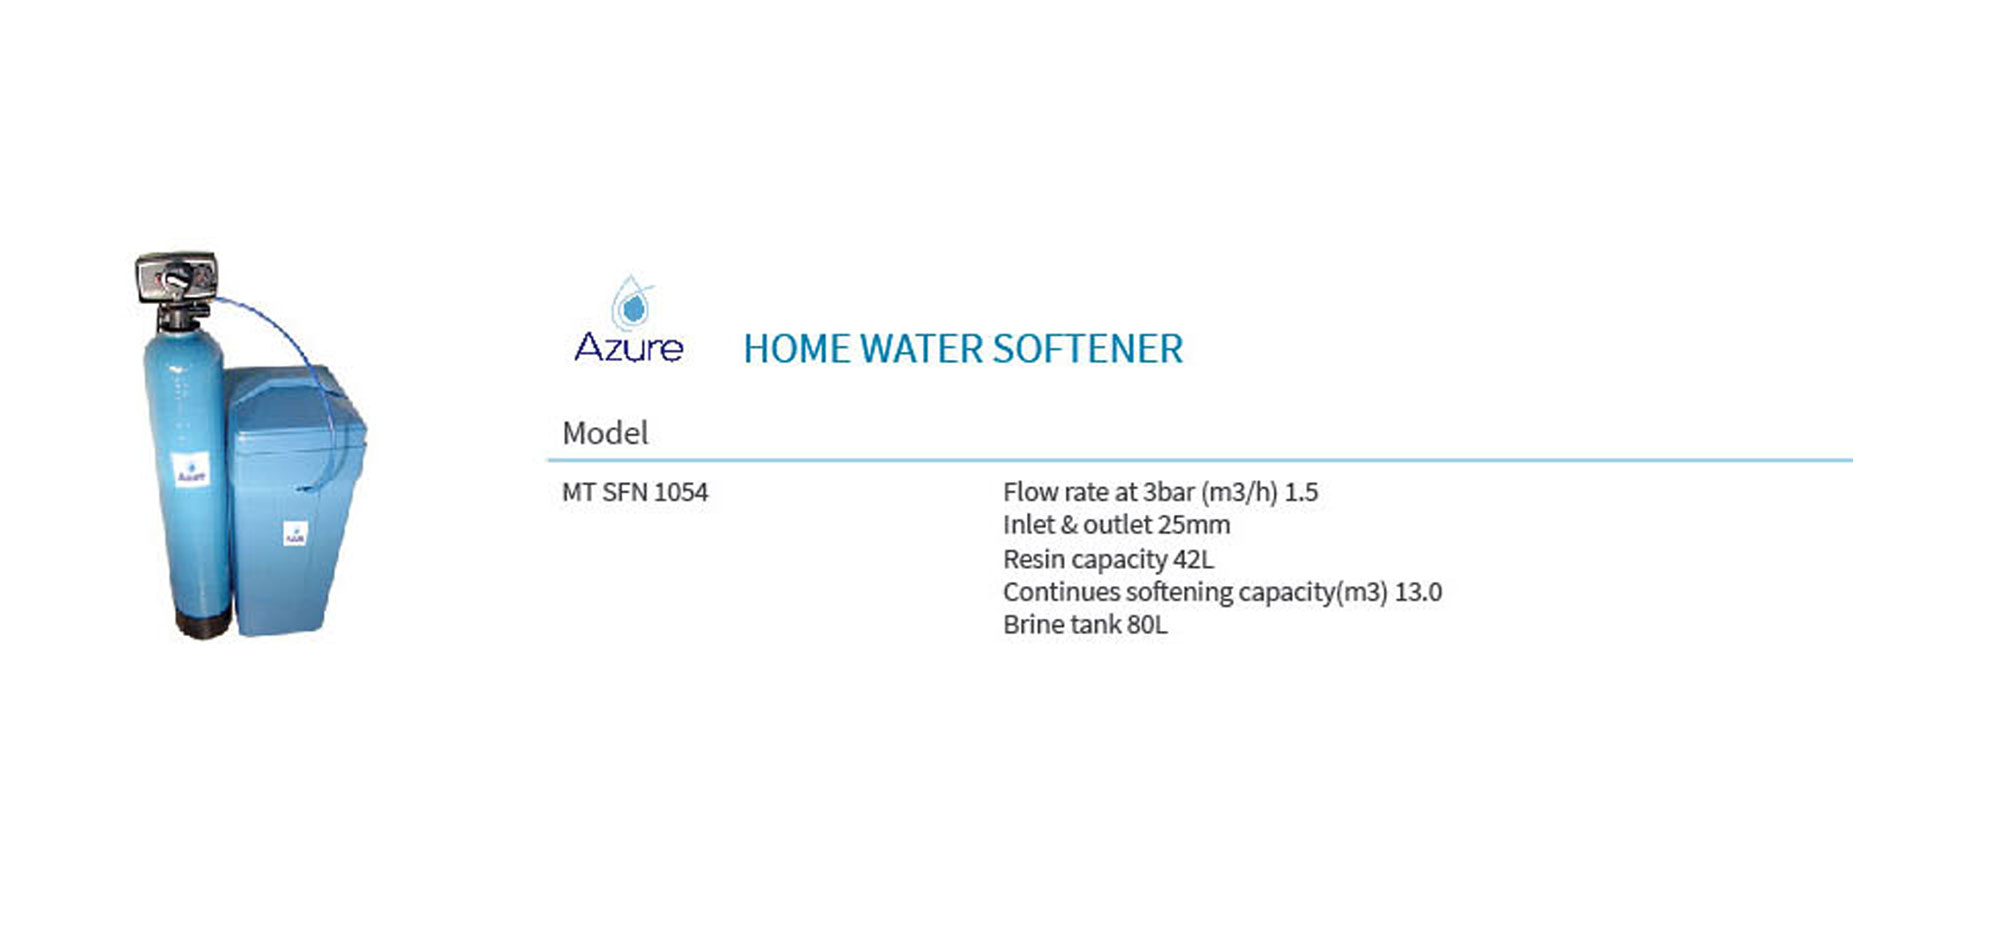 Home water softener